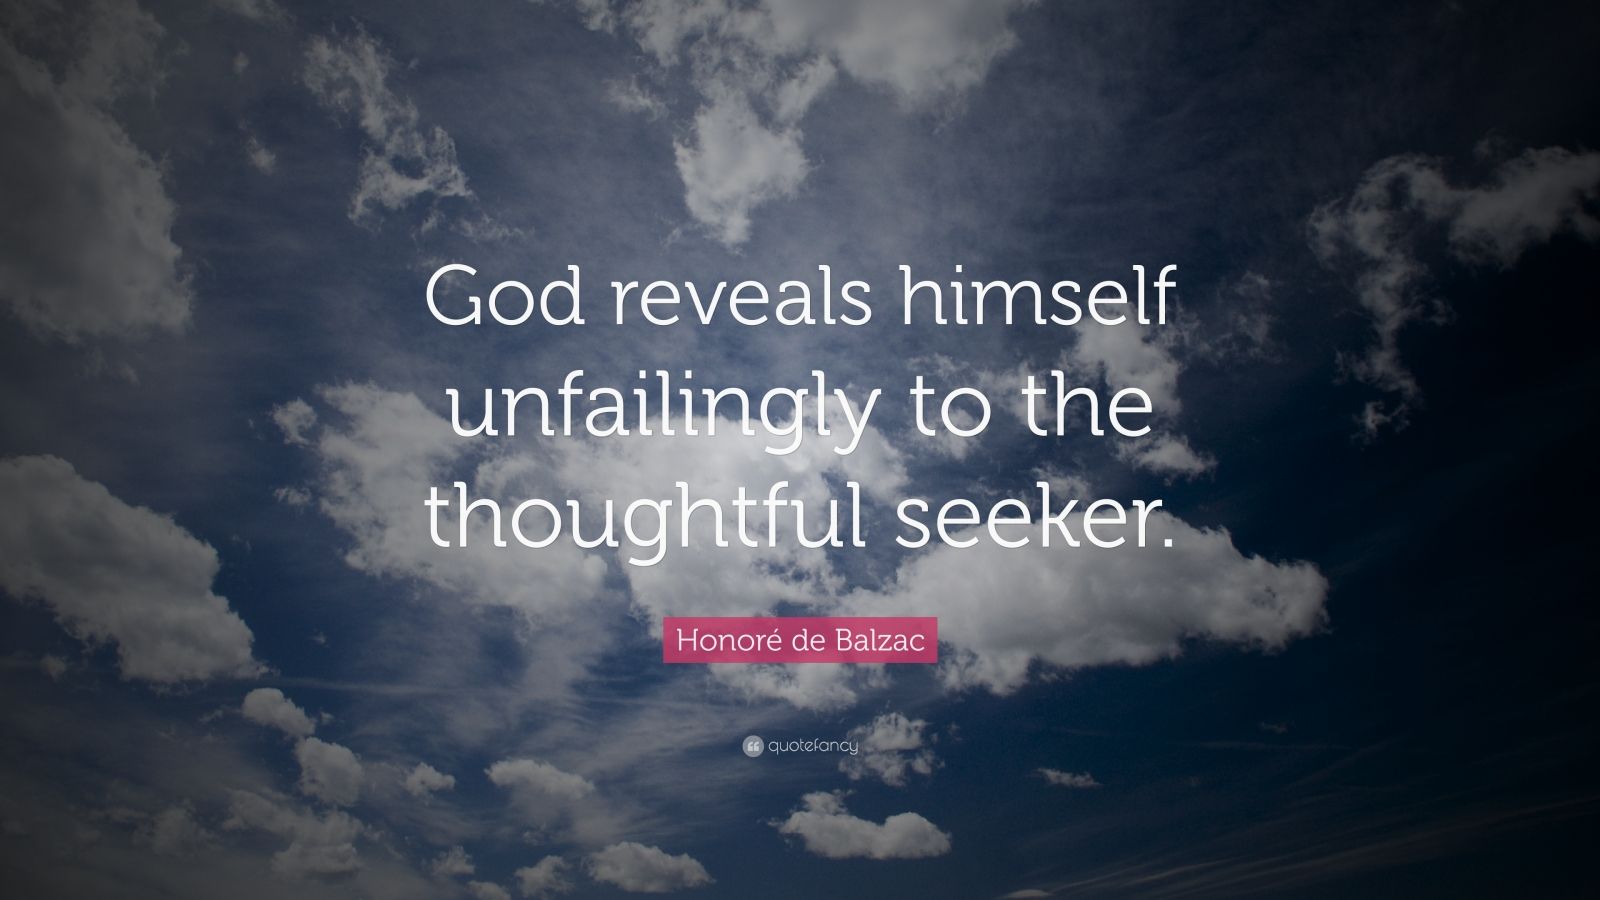 Honoré de Balzac Quote: “God reveals himself unfailingly to the thoughtful seeker ...1600 x 900